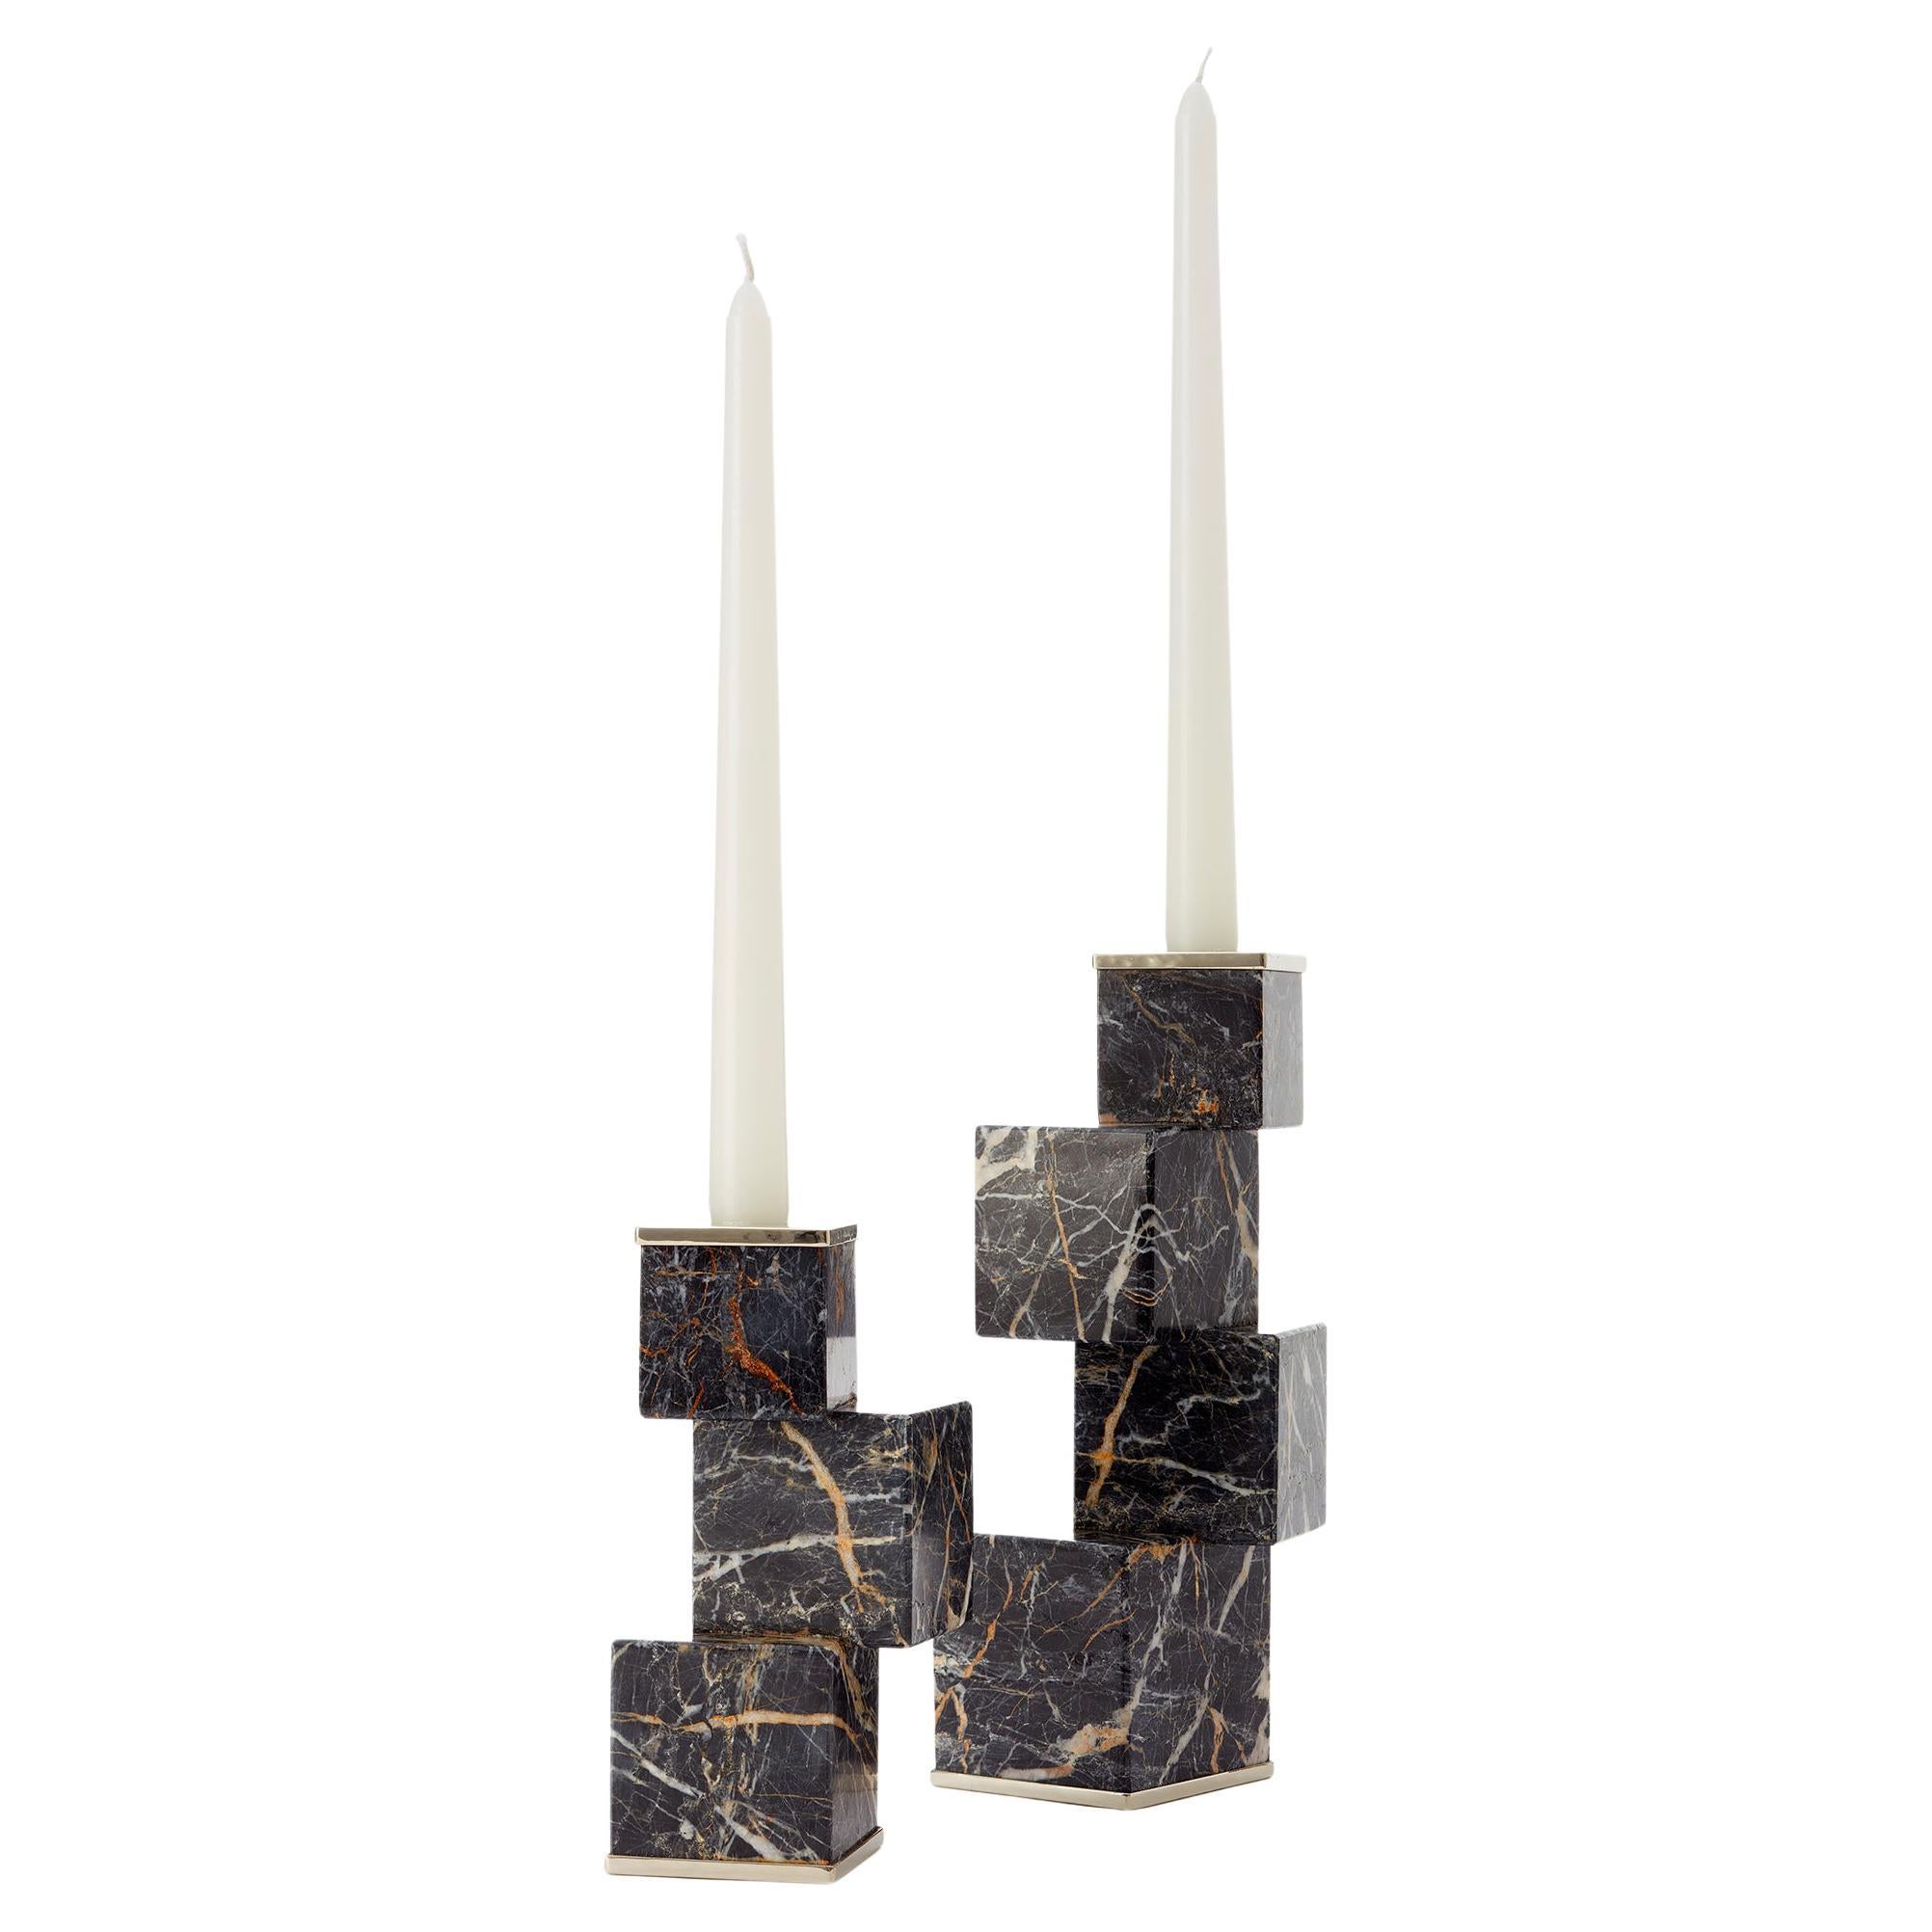 Vertigo Short and Tall Black Onyx Stone Candleholders